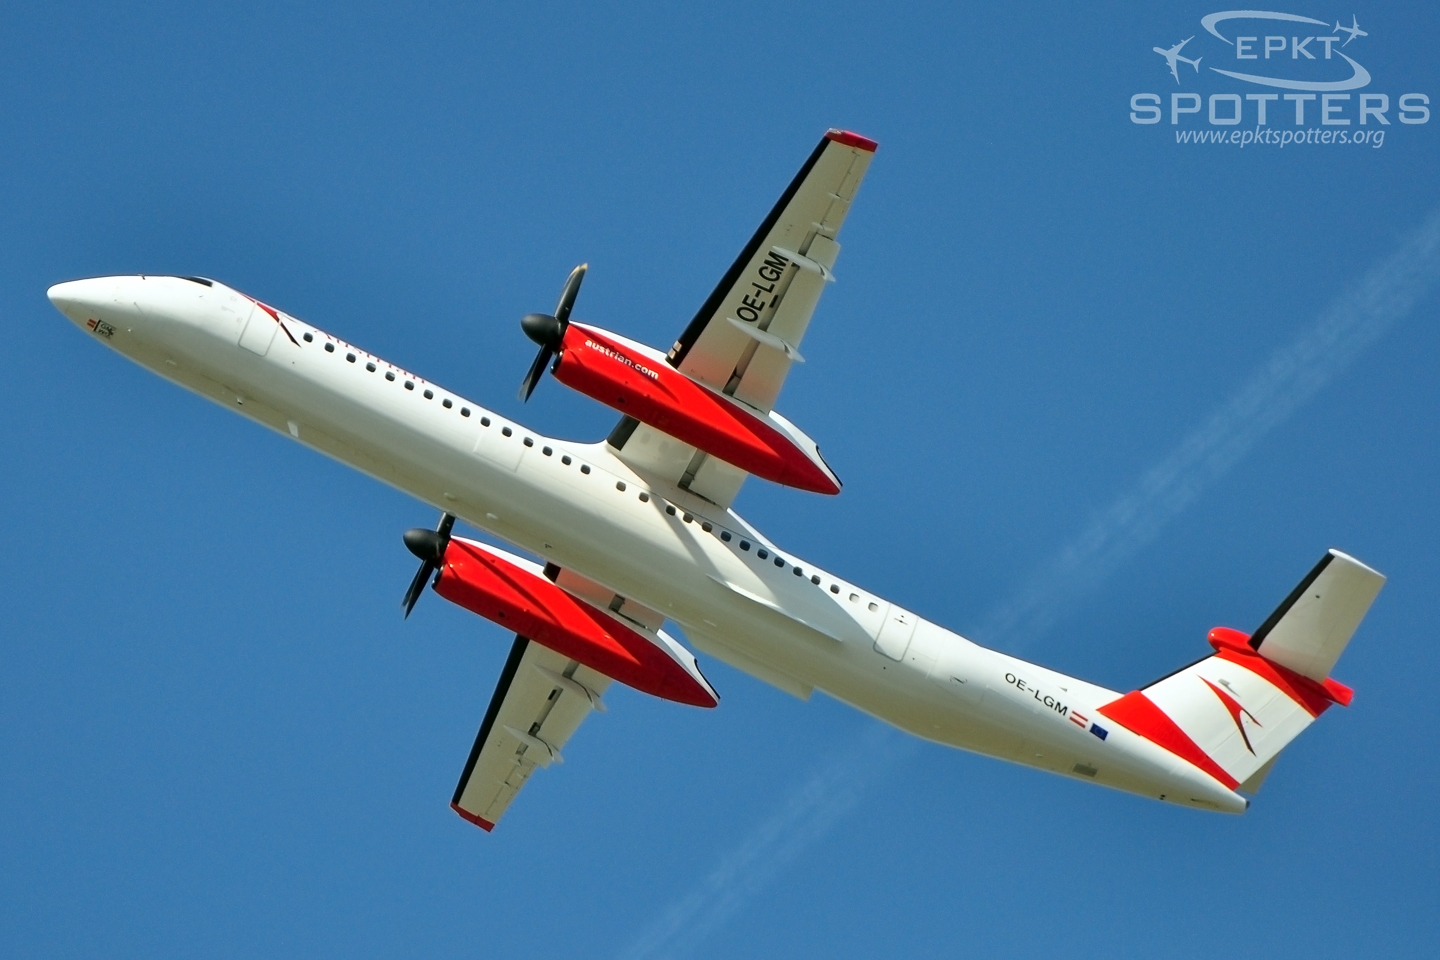 OE-LGM - Bombardier Dash 8 -Q402 (Austrian arrows (Tyrolean Airways)) / Balice - Krakow Poland [EPKK/KRK]